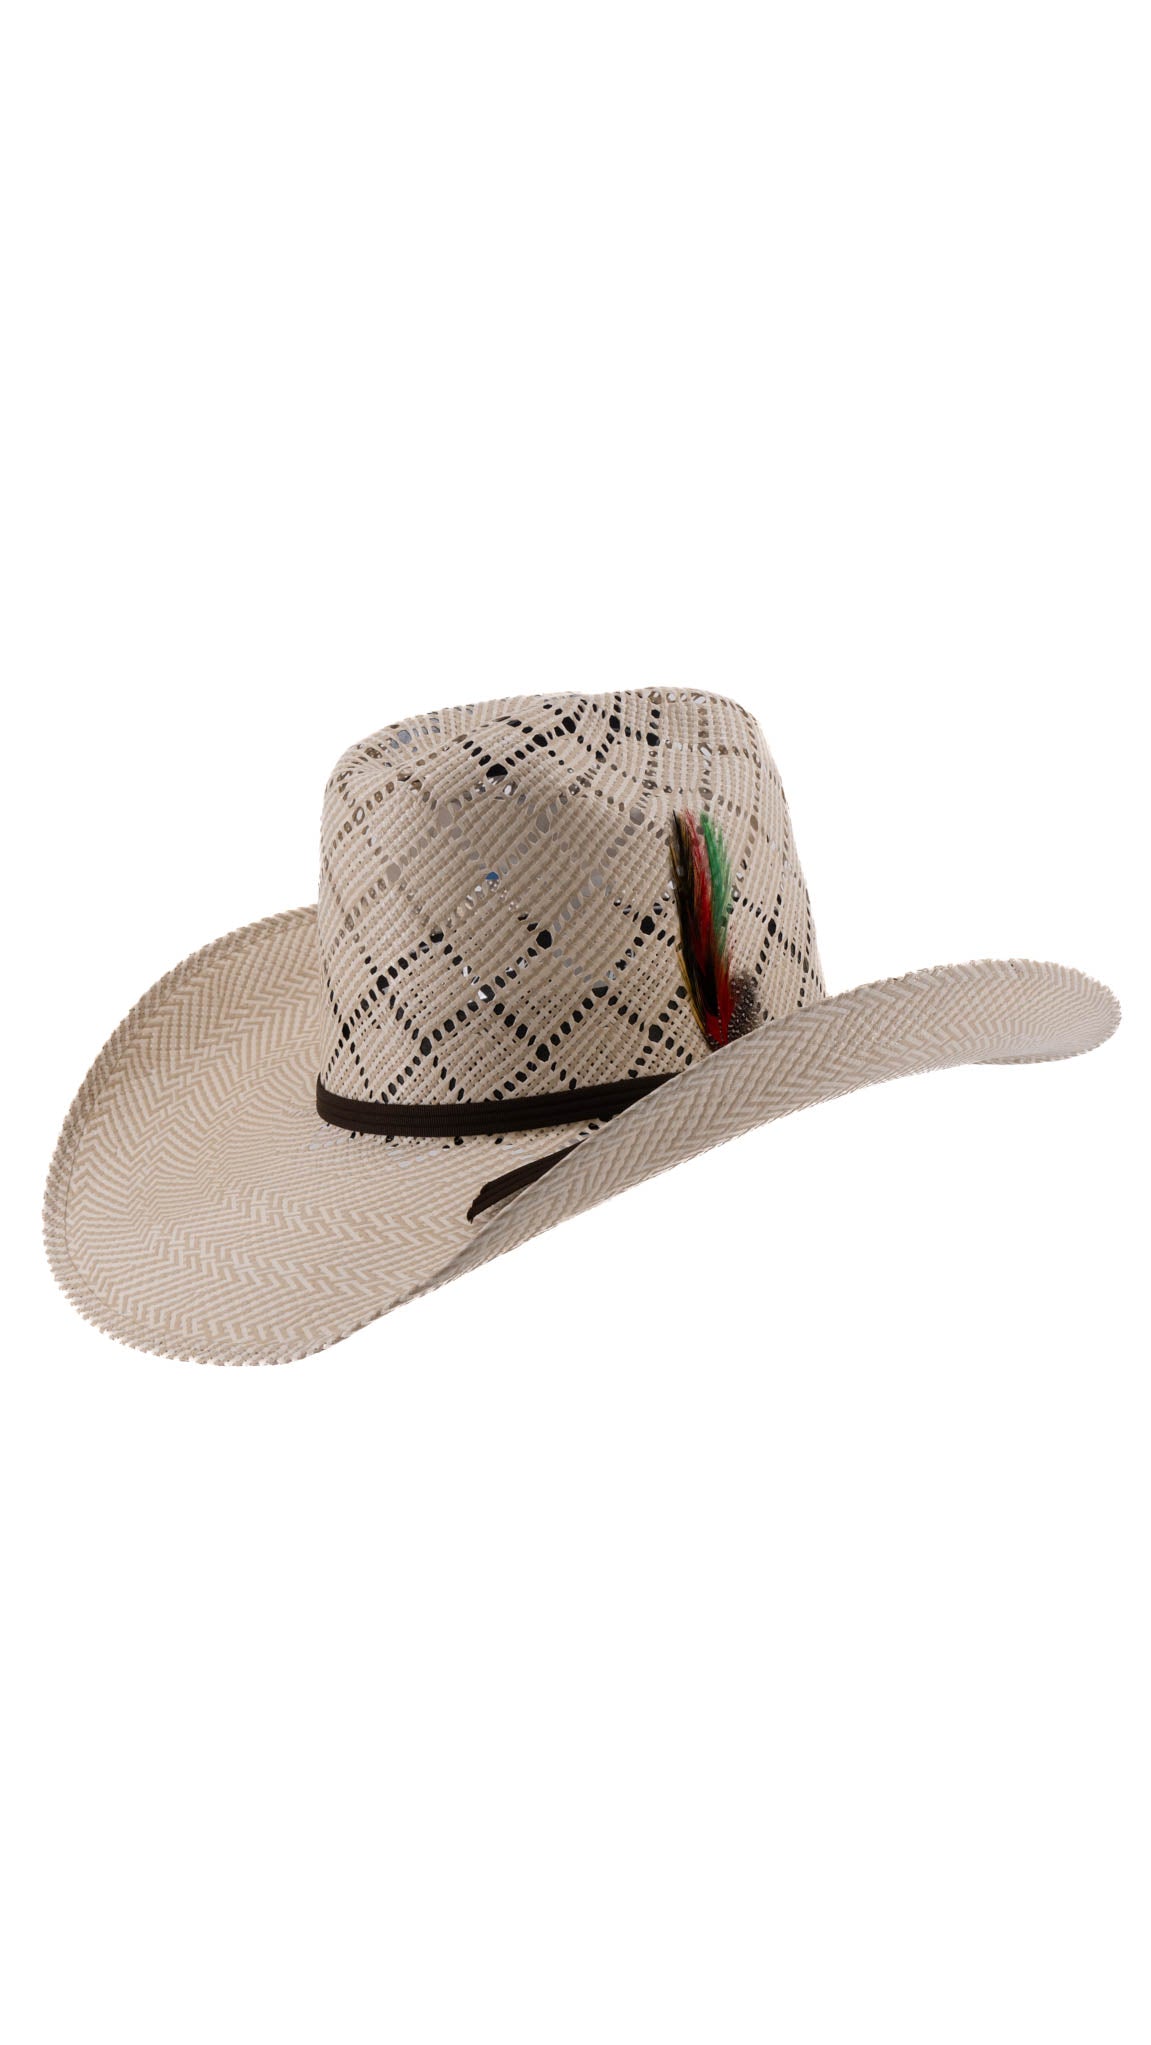 Hector 300x Straw Hat